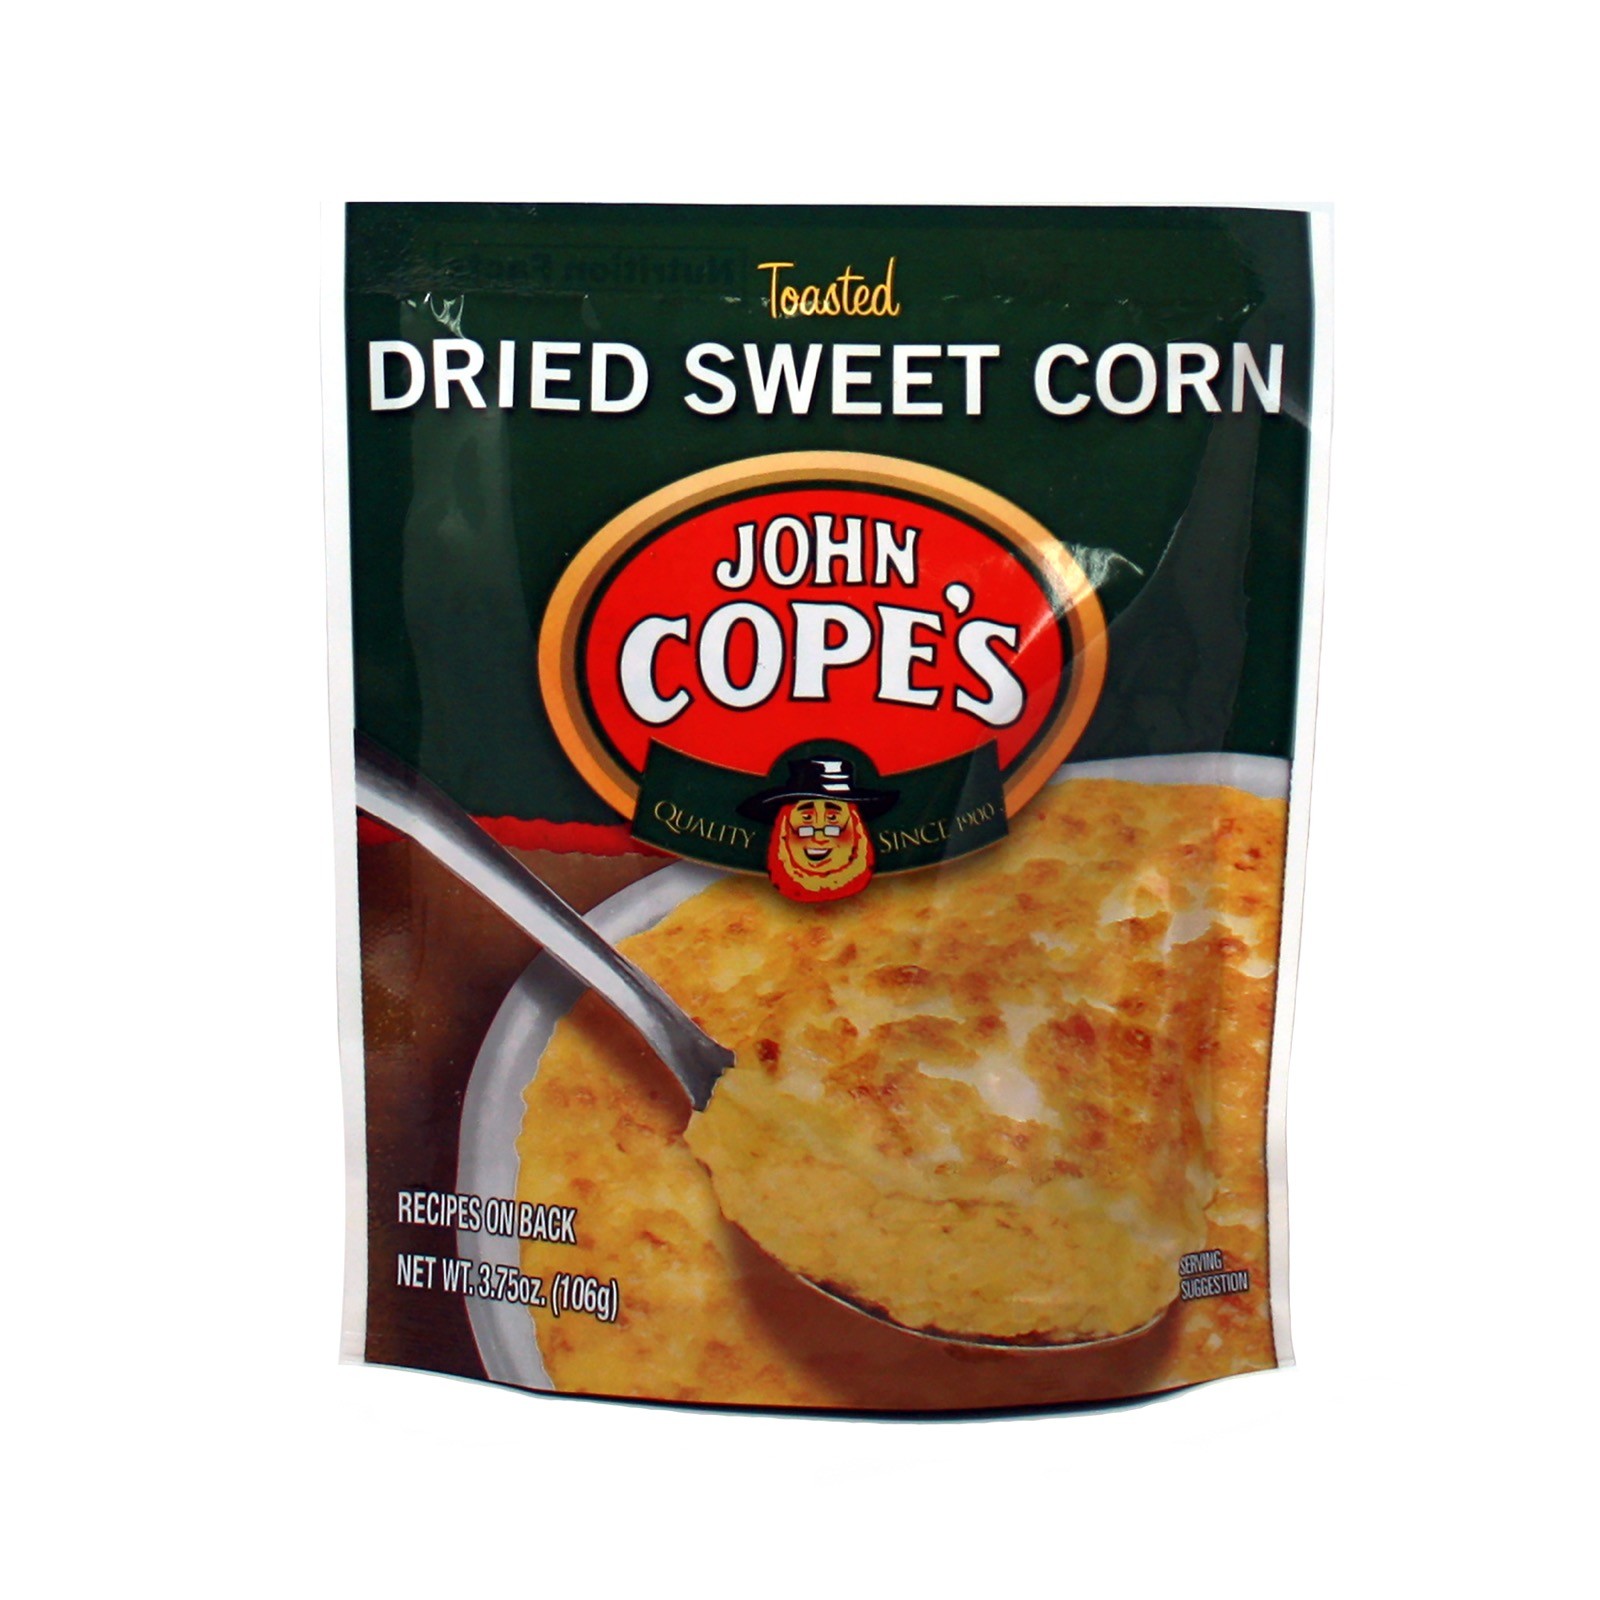 Copes Dried Sweet Corn 3.75oz 41183-00170-5 image side 01